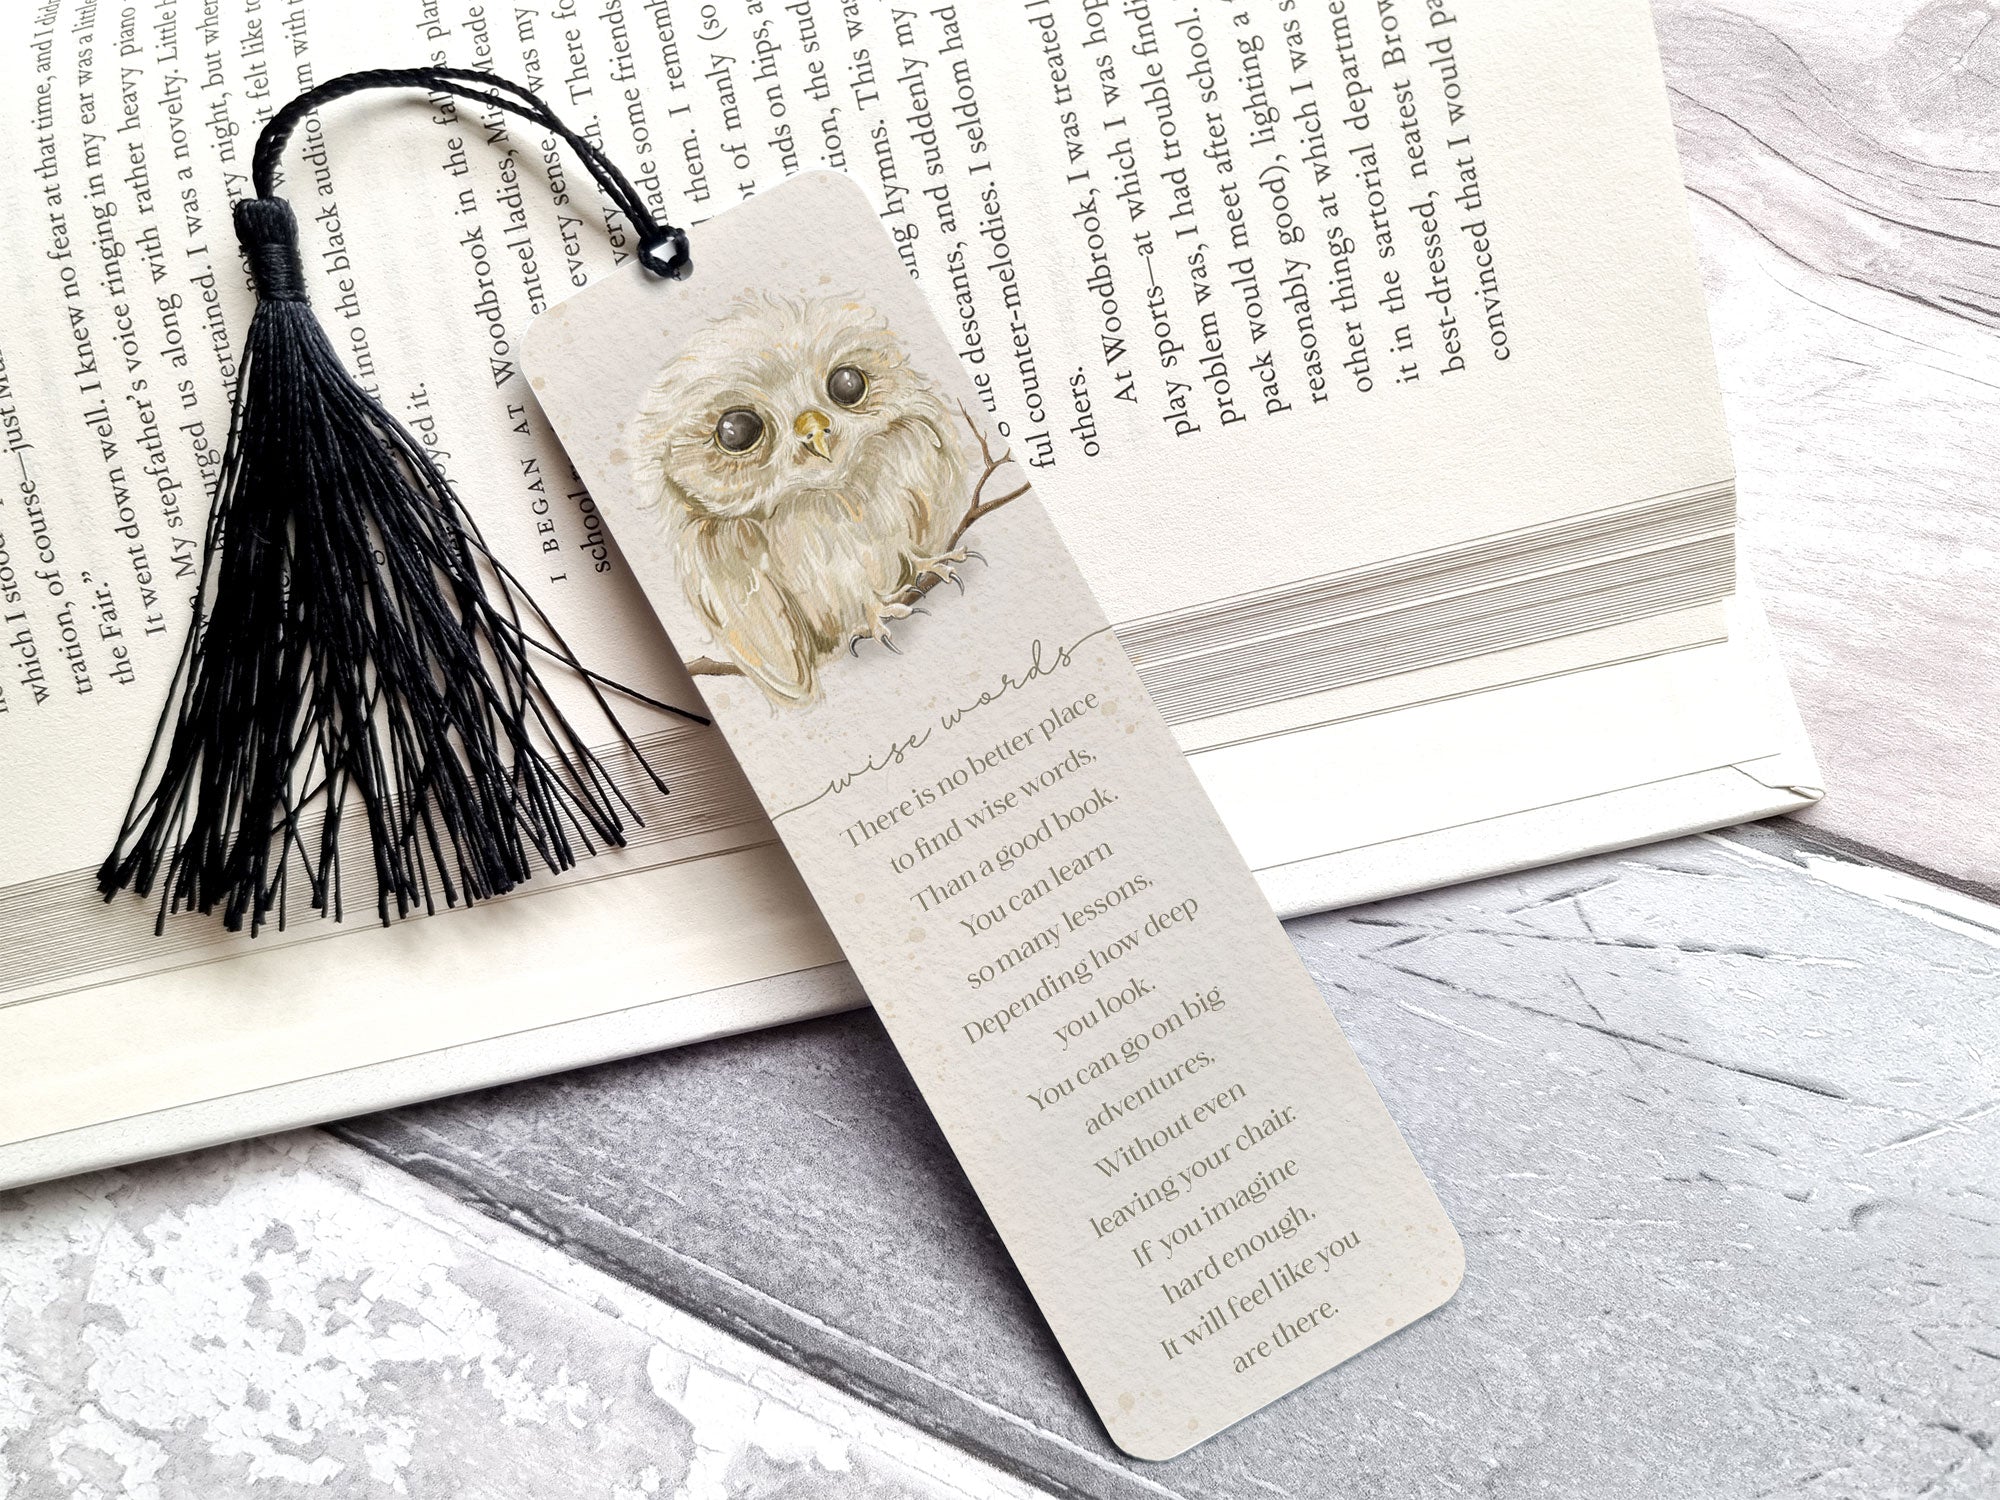 Owl Bookmark